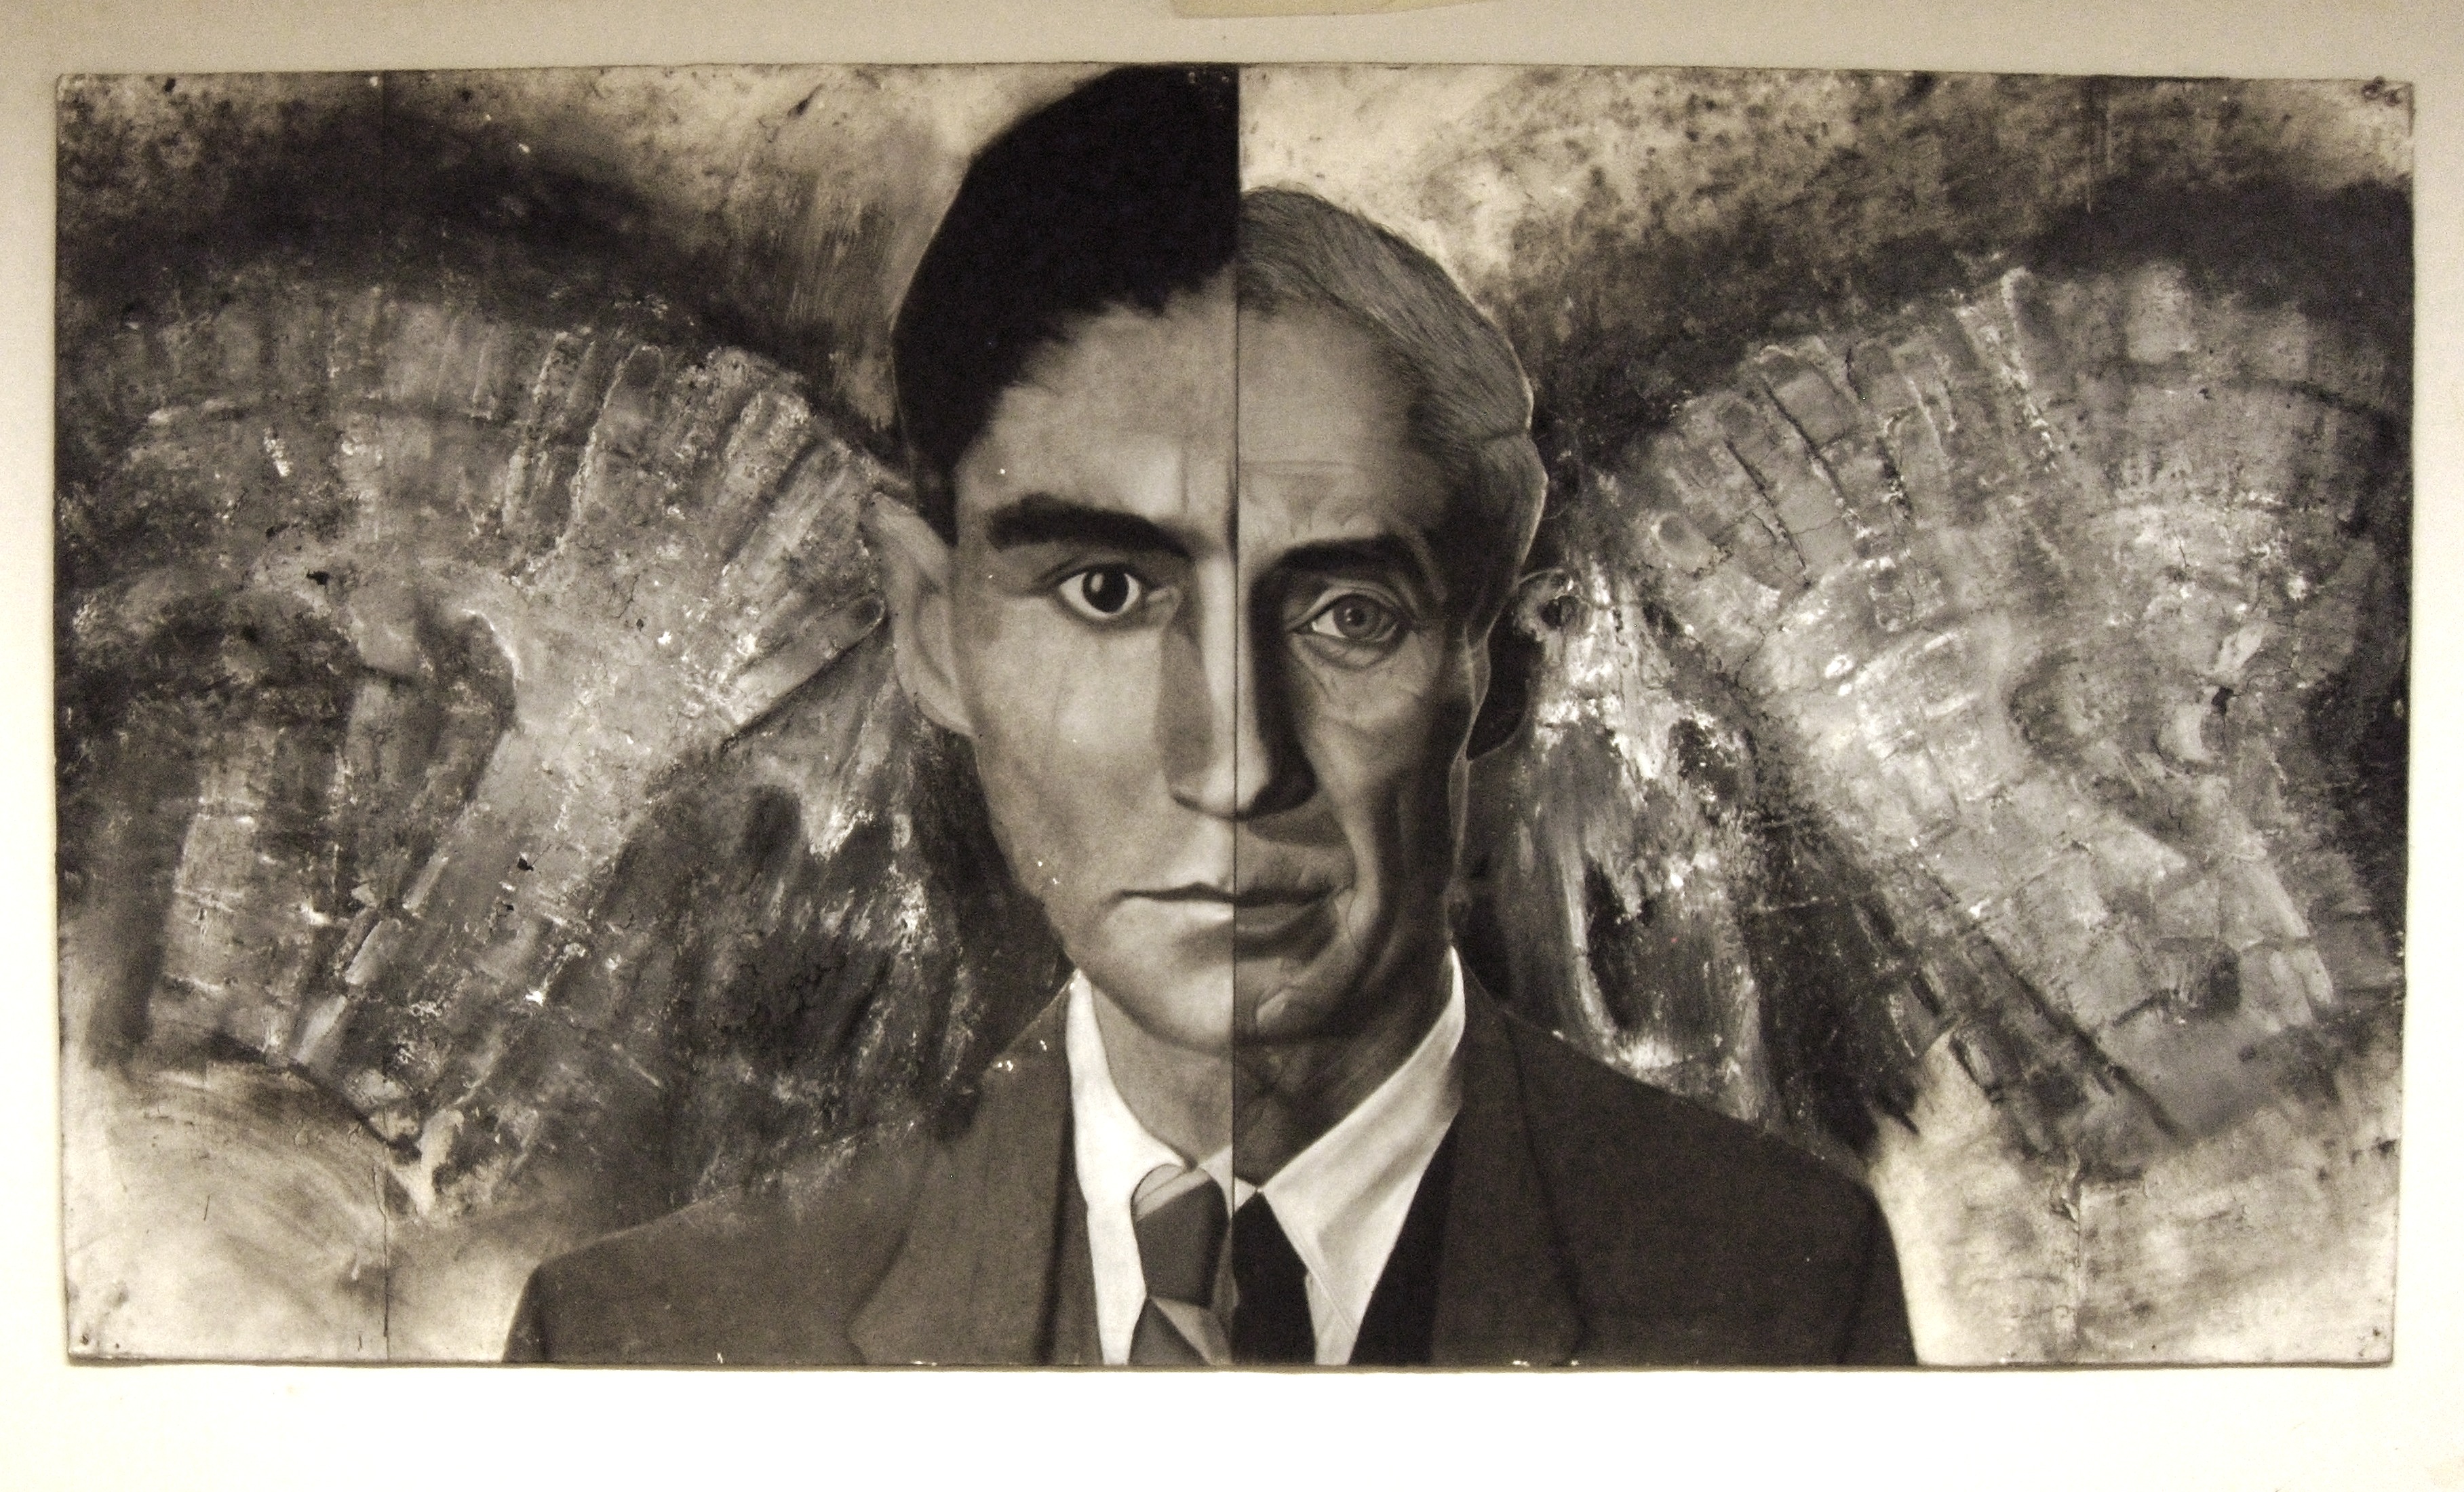 Kafka/Oppenheimer and Interiors